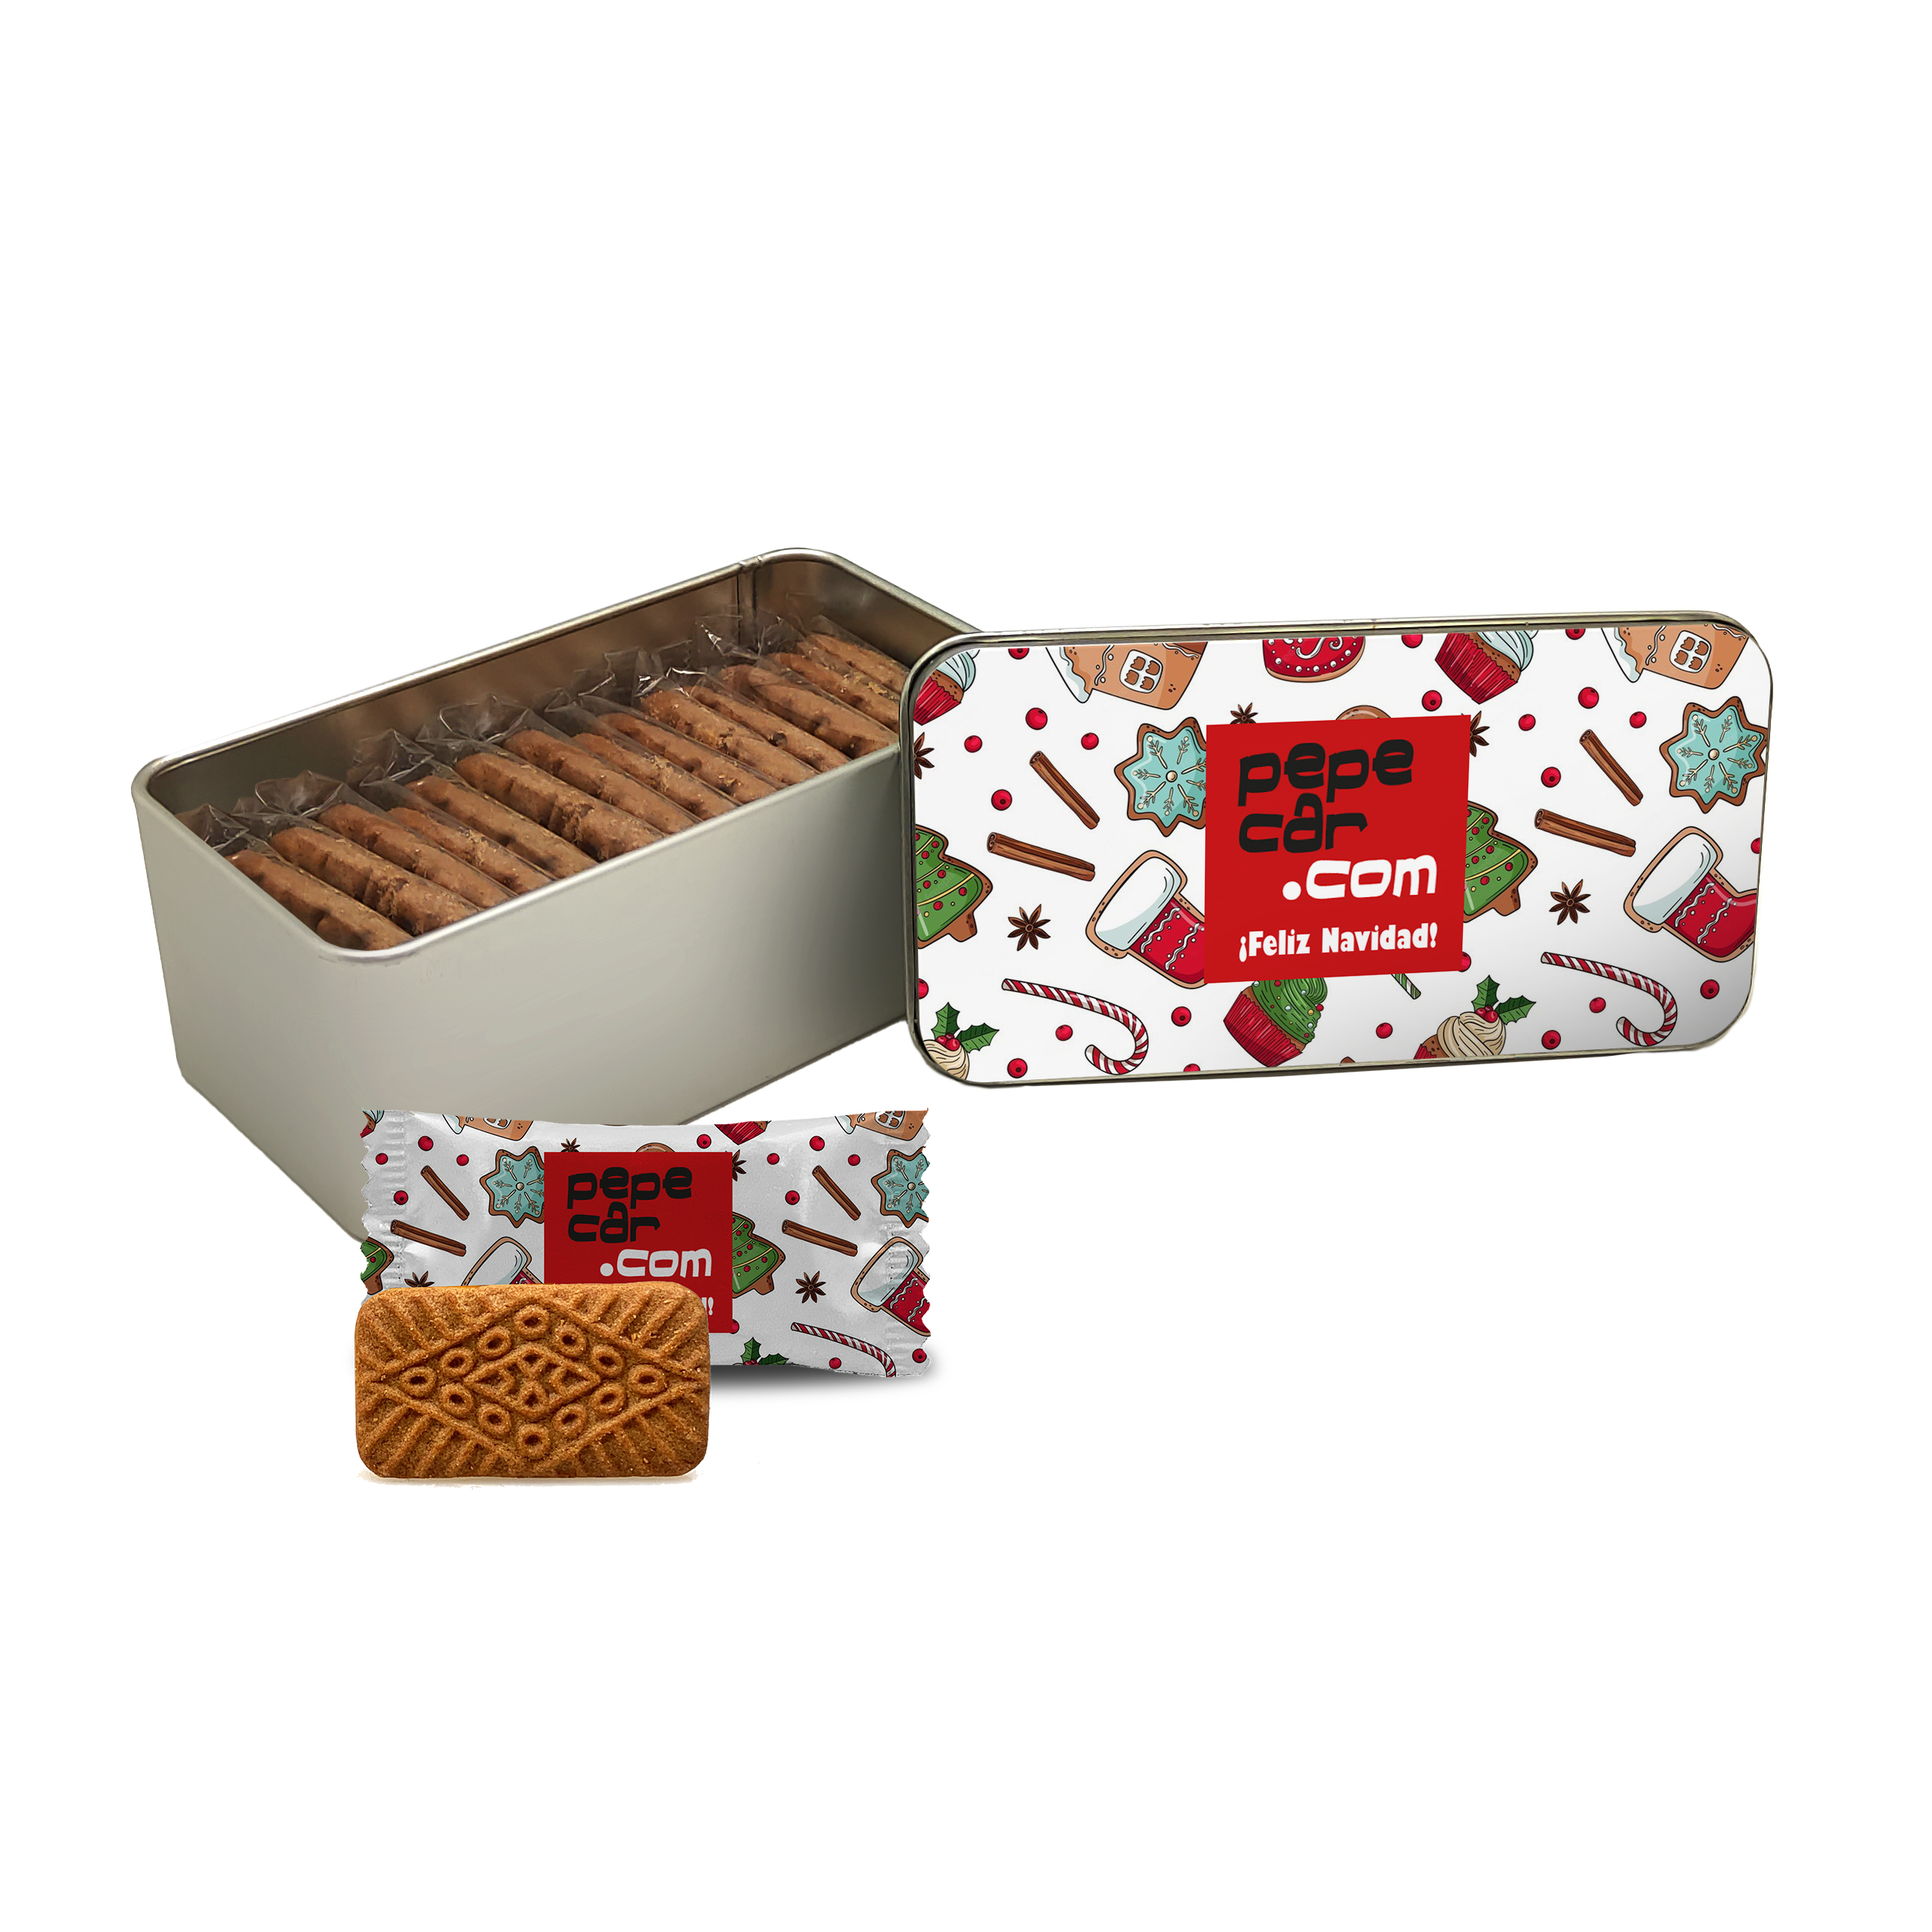 Box with cinnamon cookies